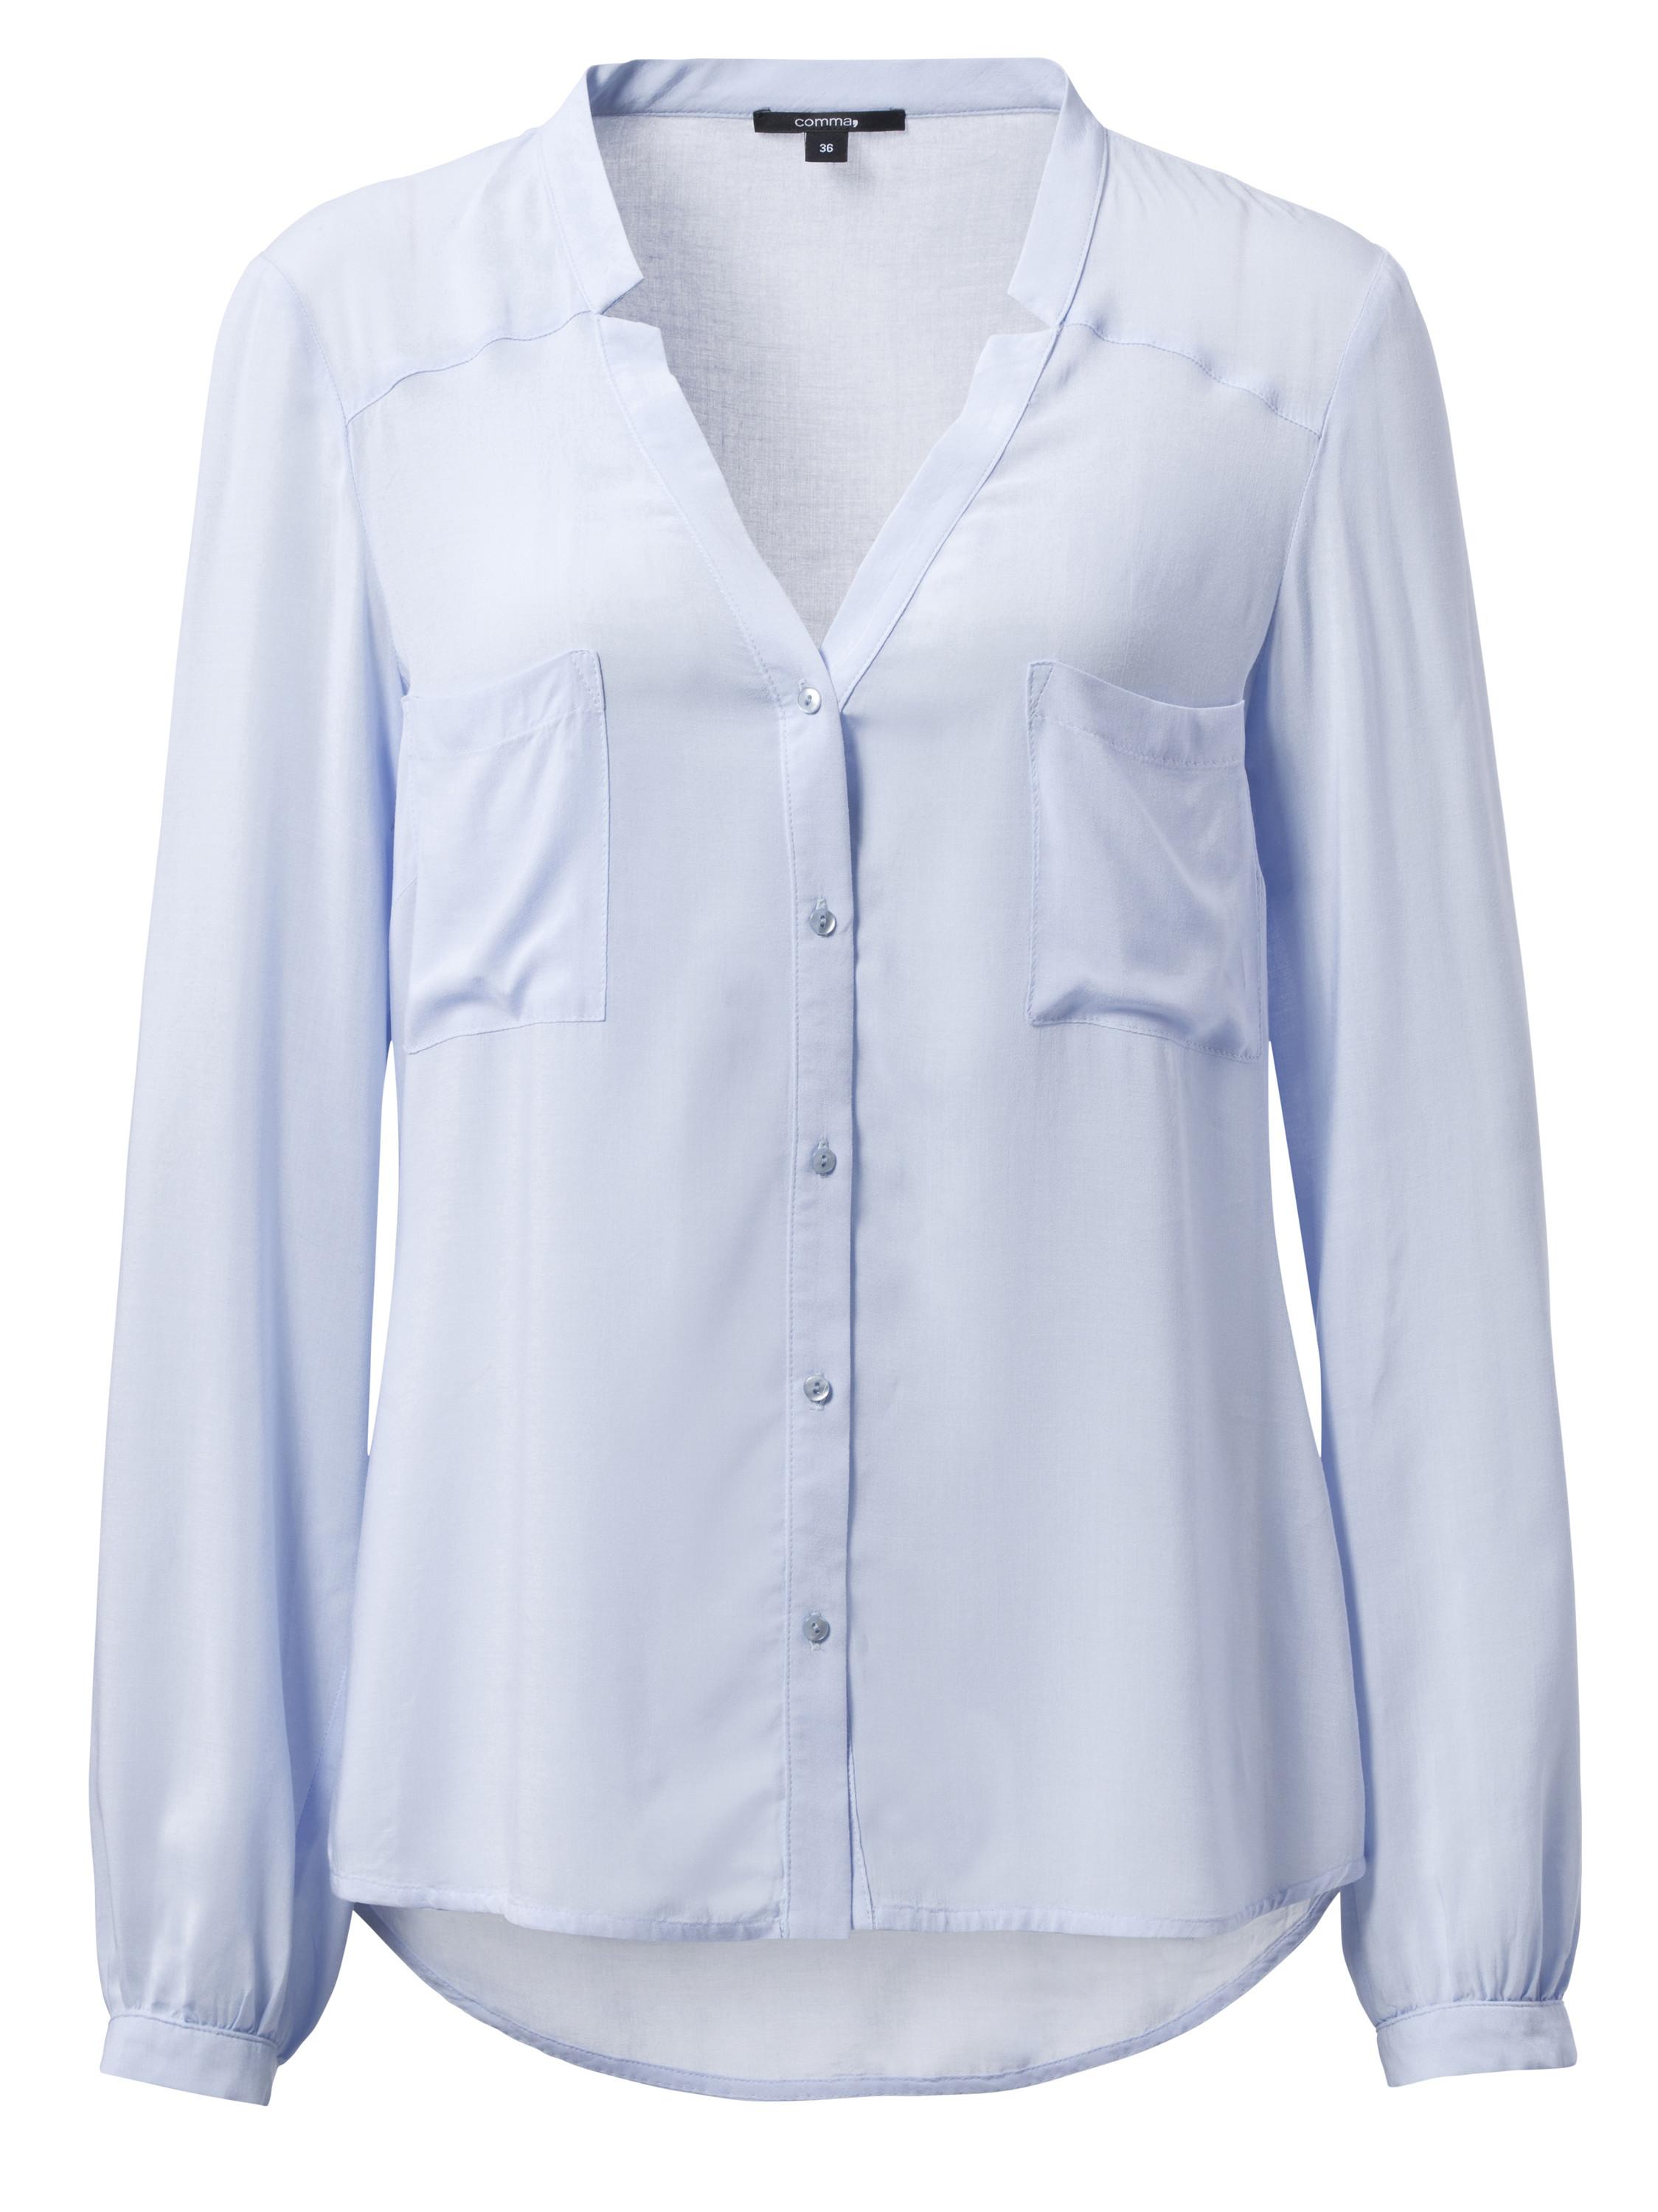 Vrouwelijke blouse - Comma - 59.99 euro